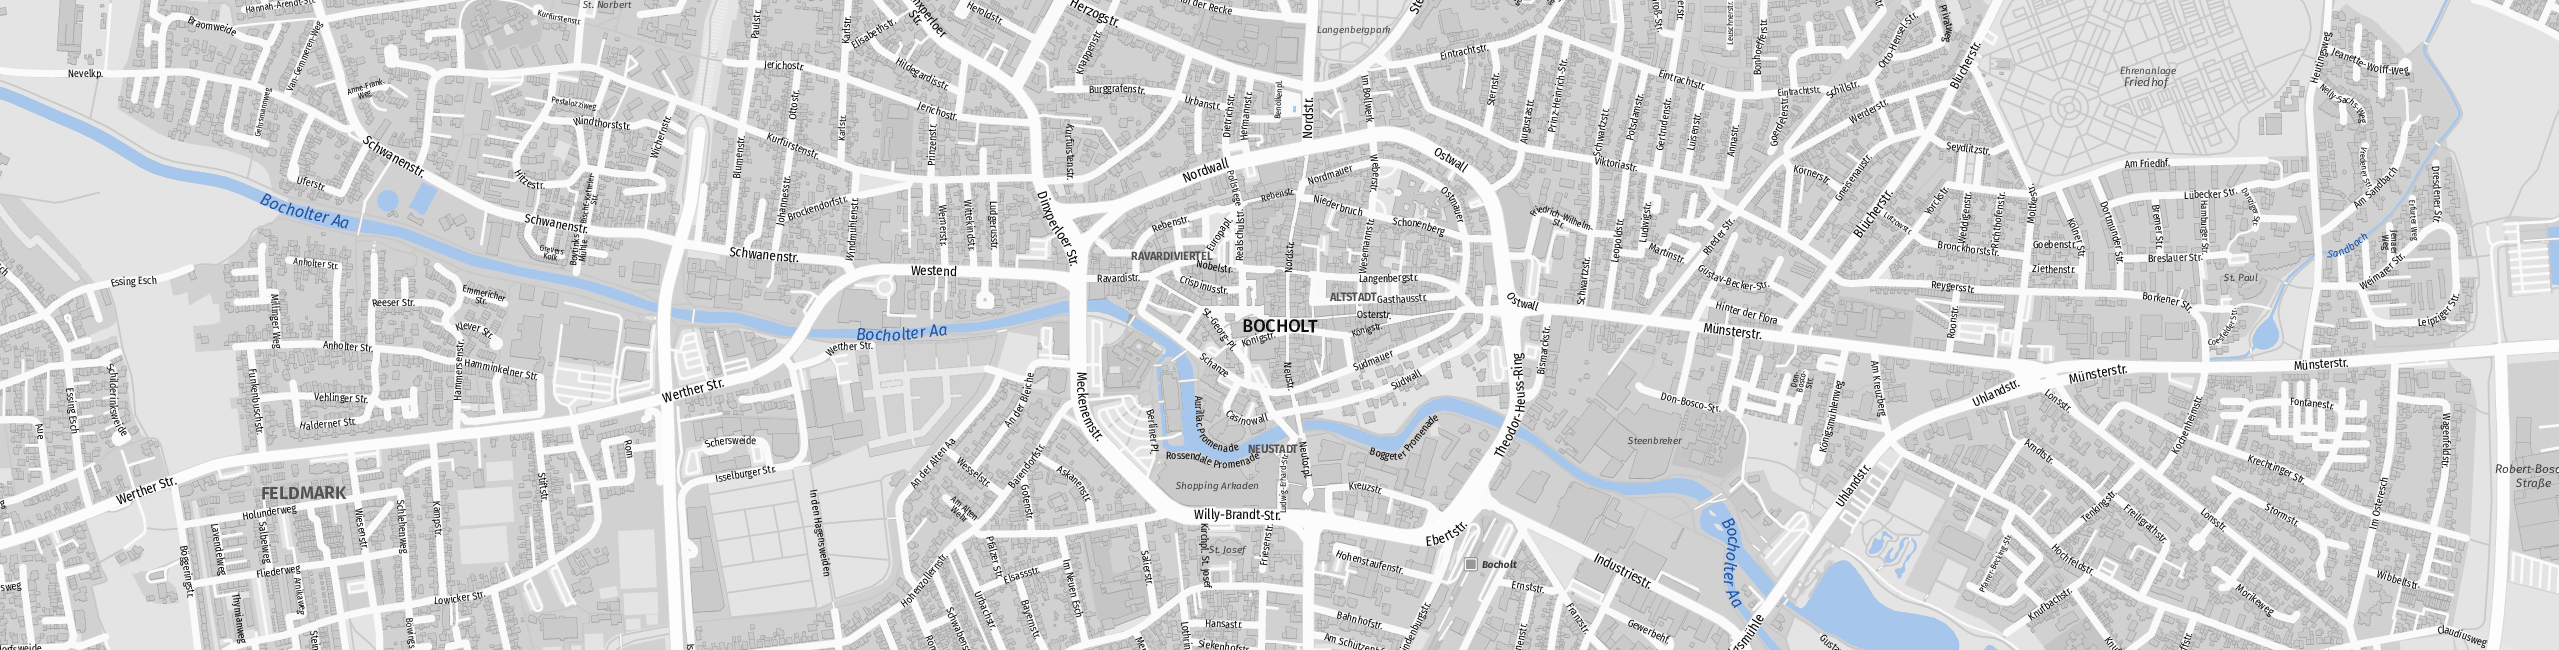 Stadtplan Bocholt zum Downloaden.